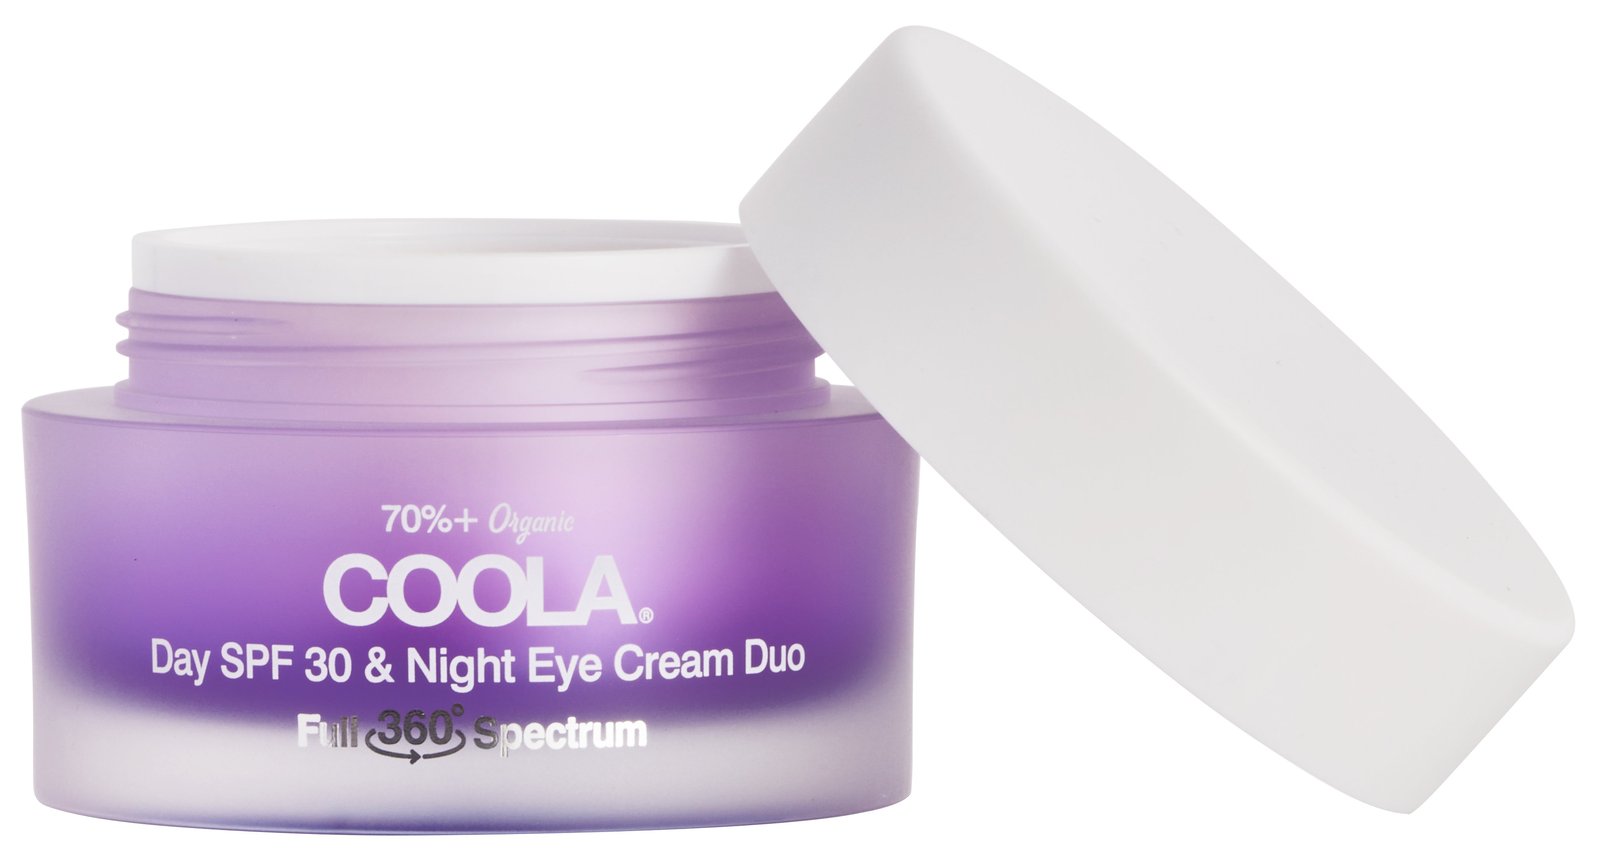 COOLA Day SPF 30 & Night Eye Cream Duo